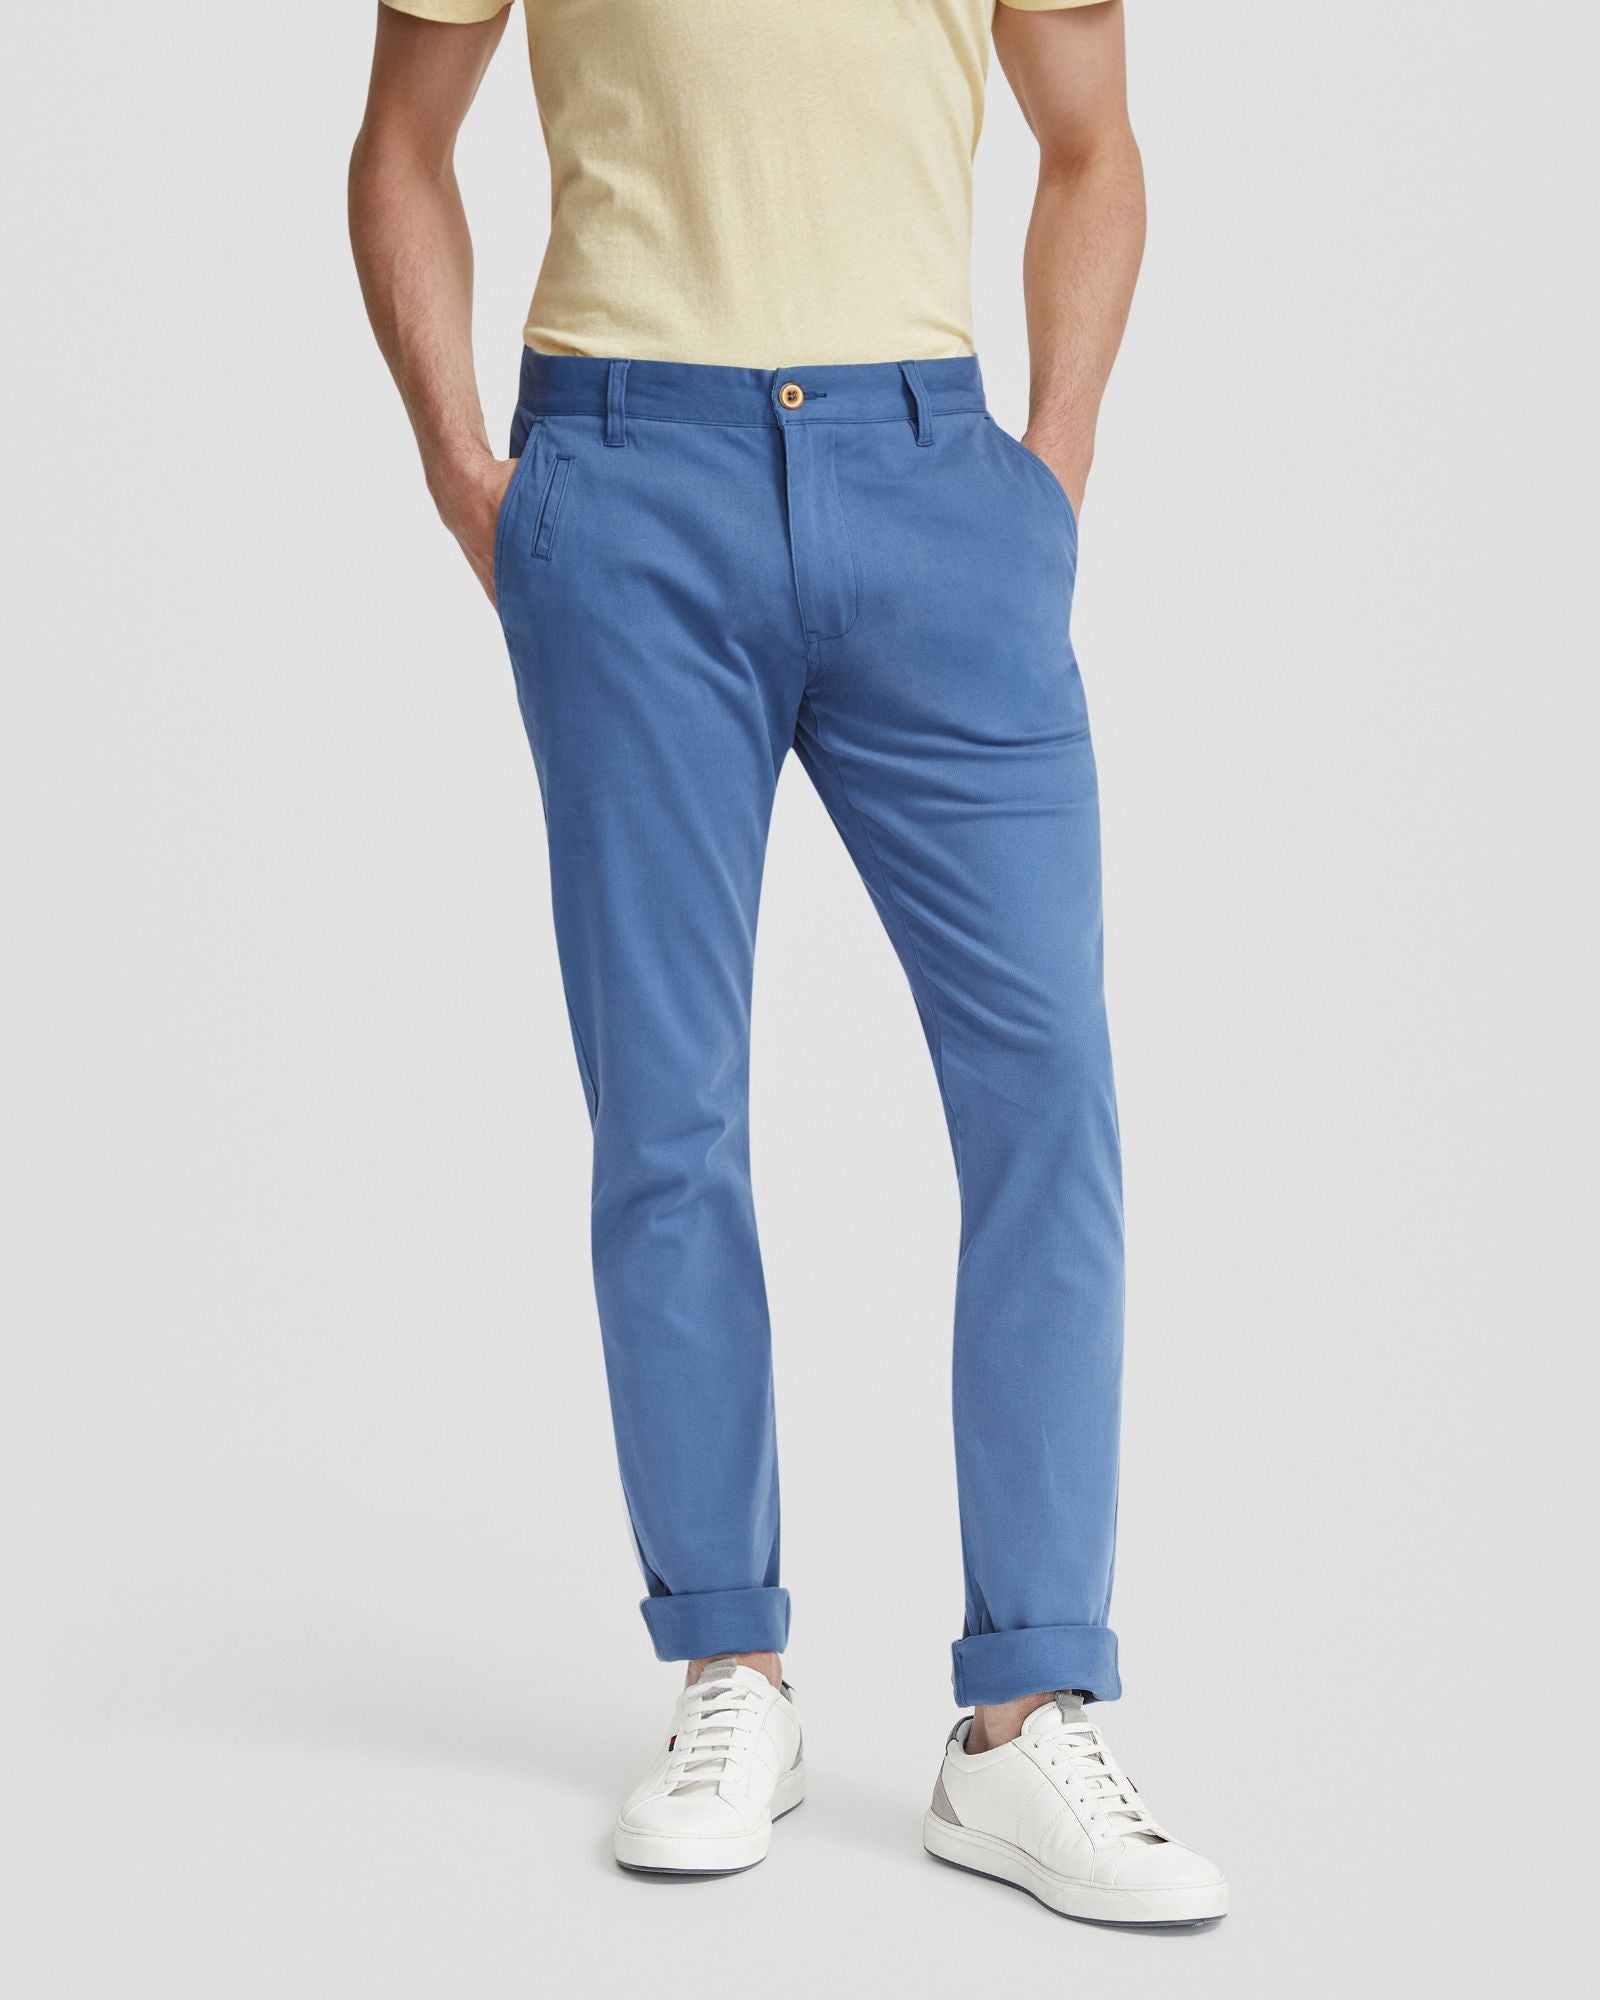 Buy Crocodile Casual Slim Fit Solid Khaki Trousers for Men